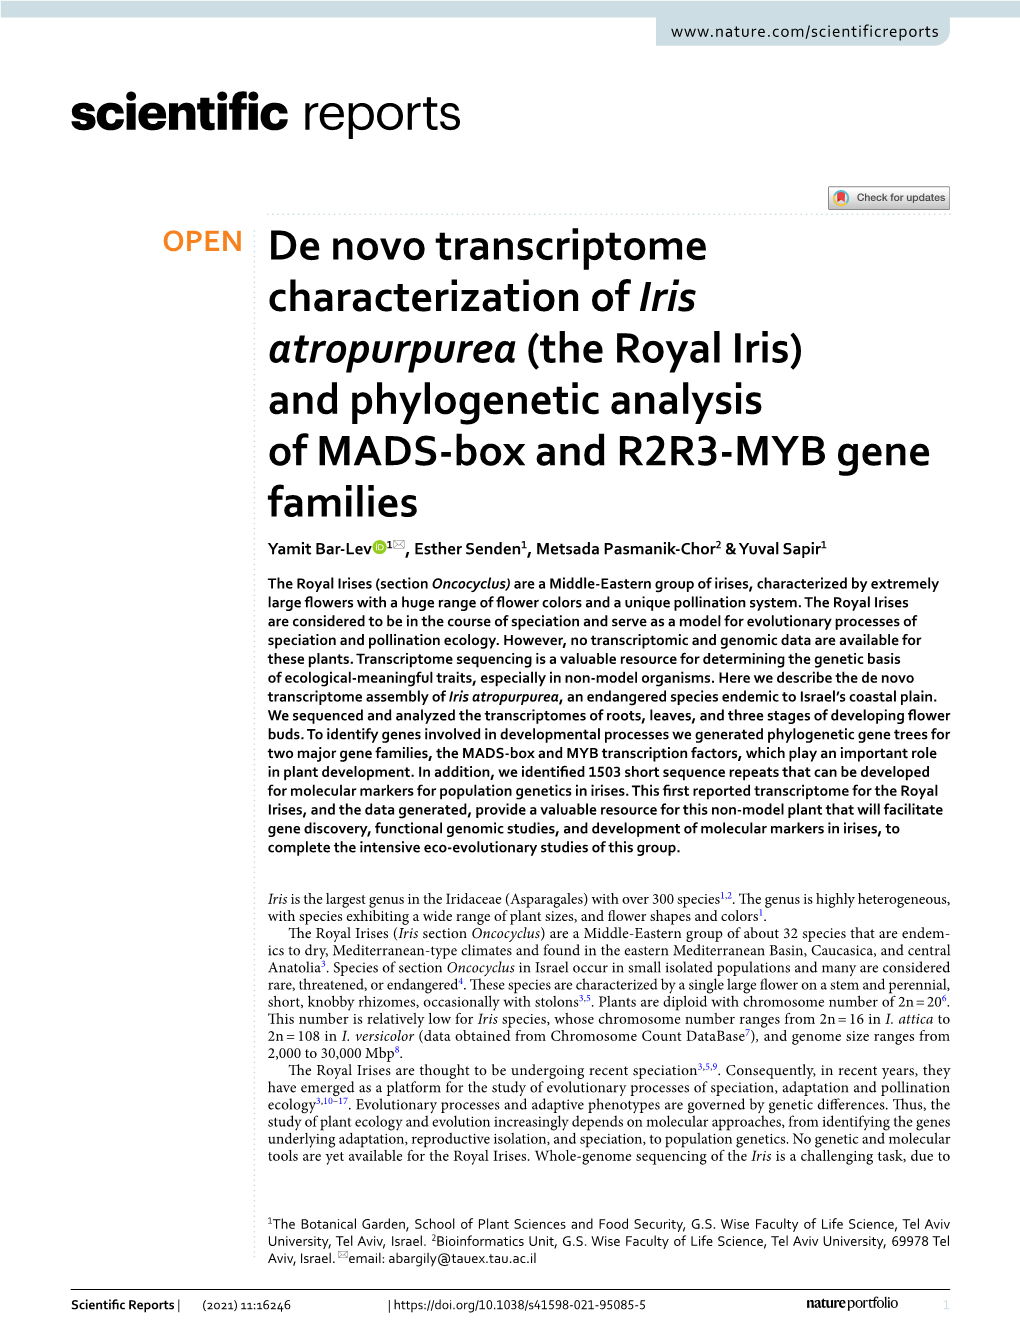 De Novo Transcriptome Characterization of Iris Atropurpurea (The Royal Iris) and Phylogenetic Analysis of MADS-Box and R2R3-MYB